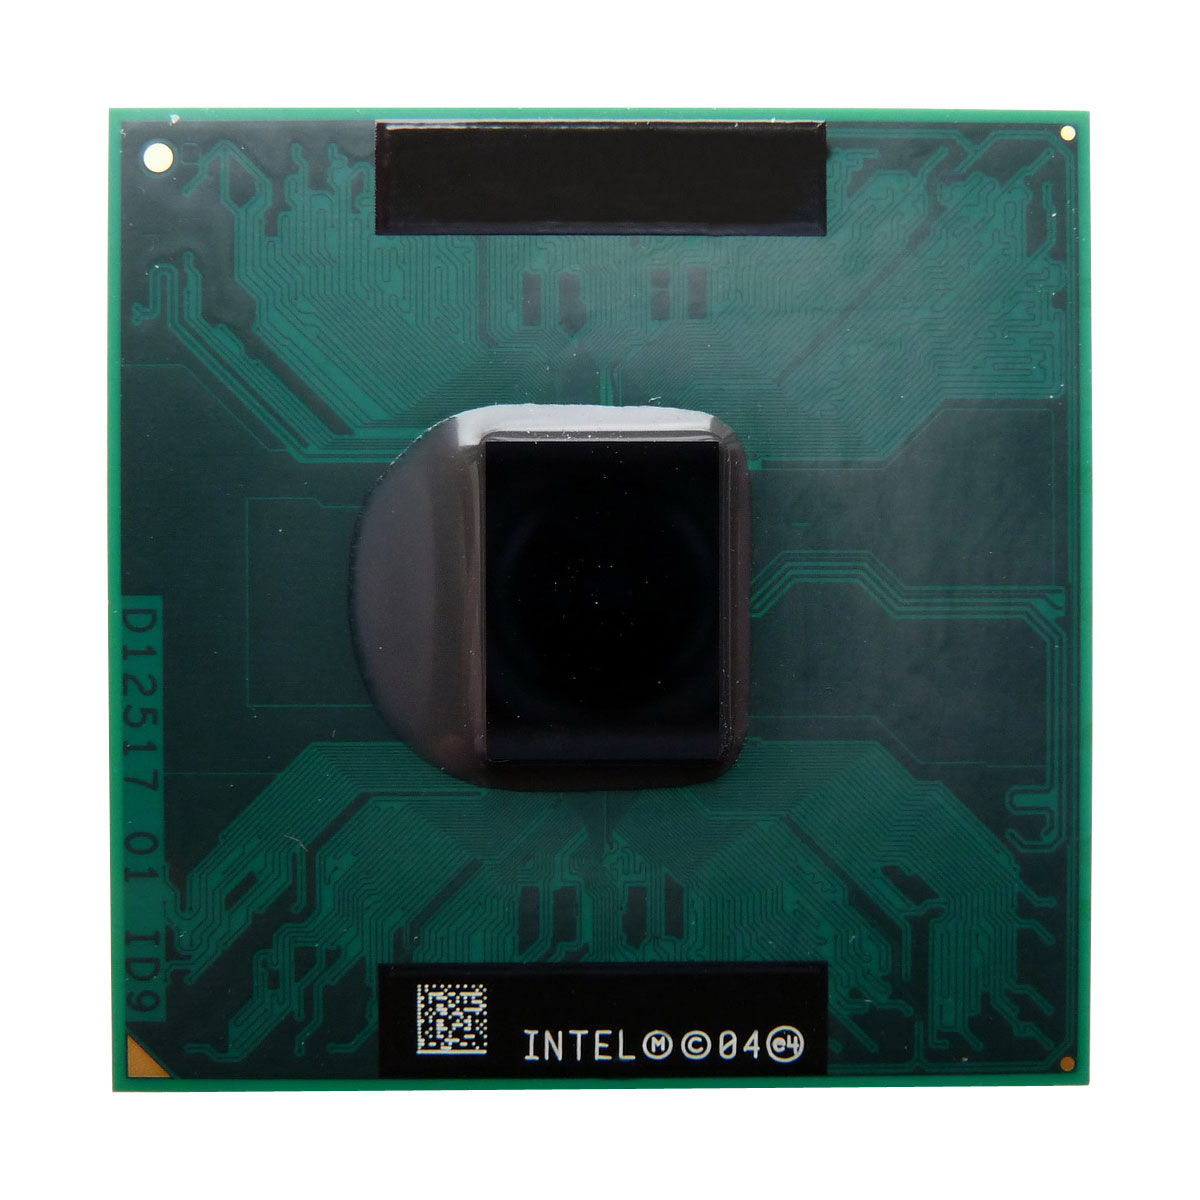 SL8VR | Intel Core DUO T2300 1.66GHz Dual Core 2MB L2 Cache 667MHz FSB Socket PPGA478 65NM 31W Processor